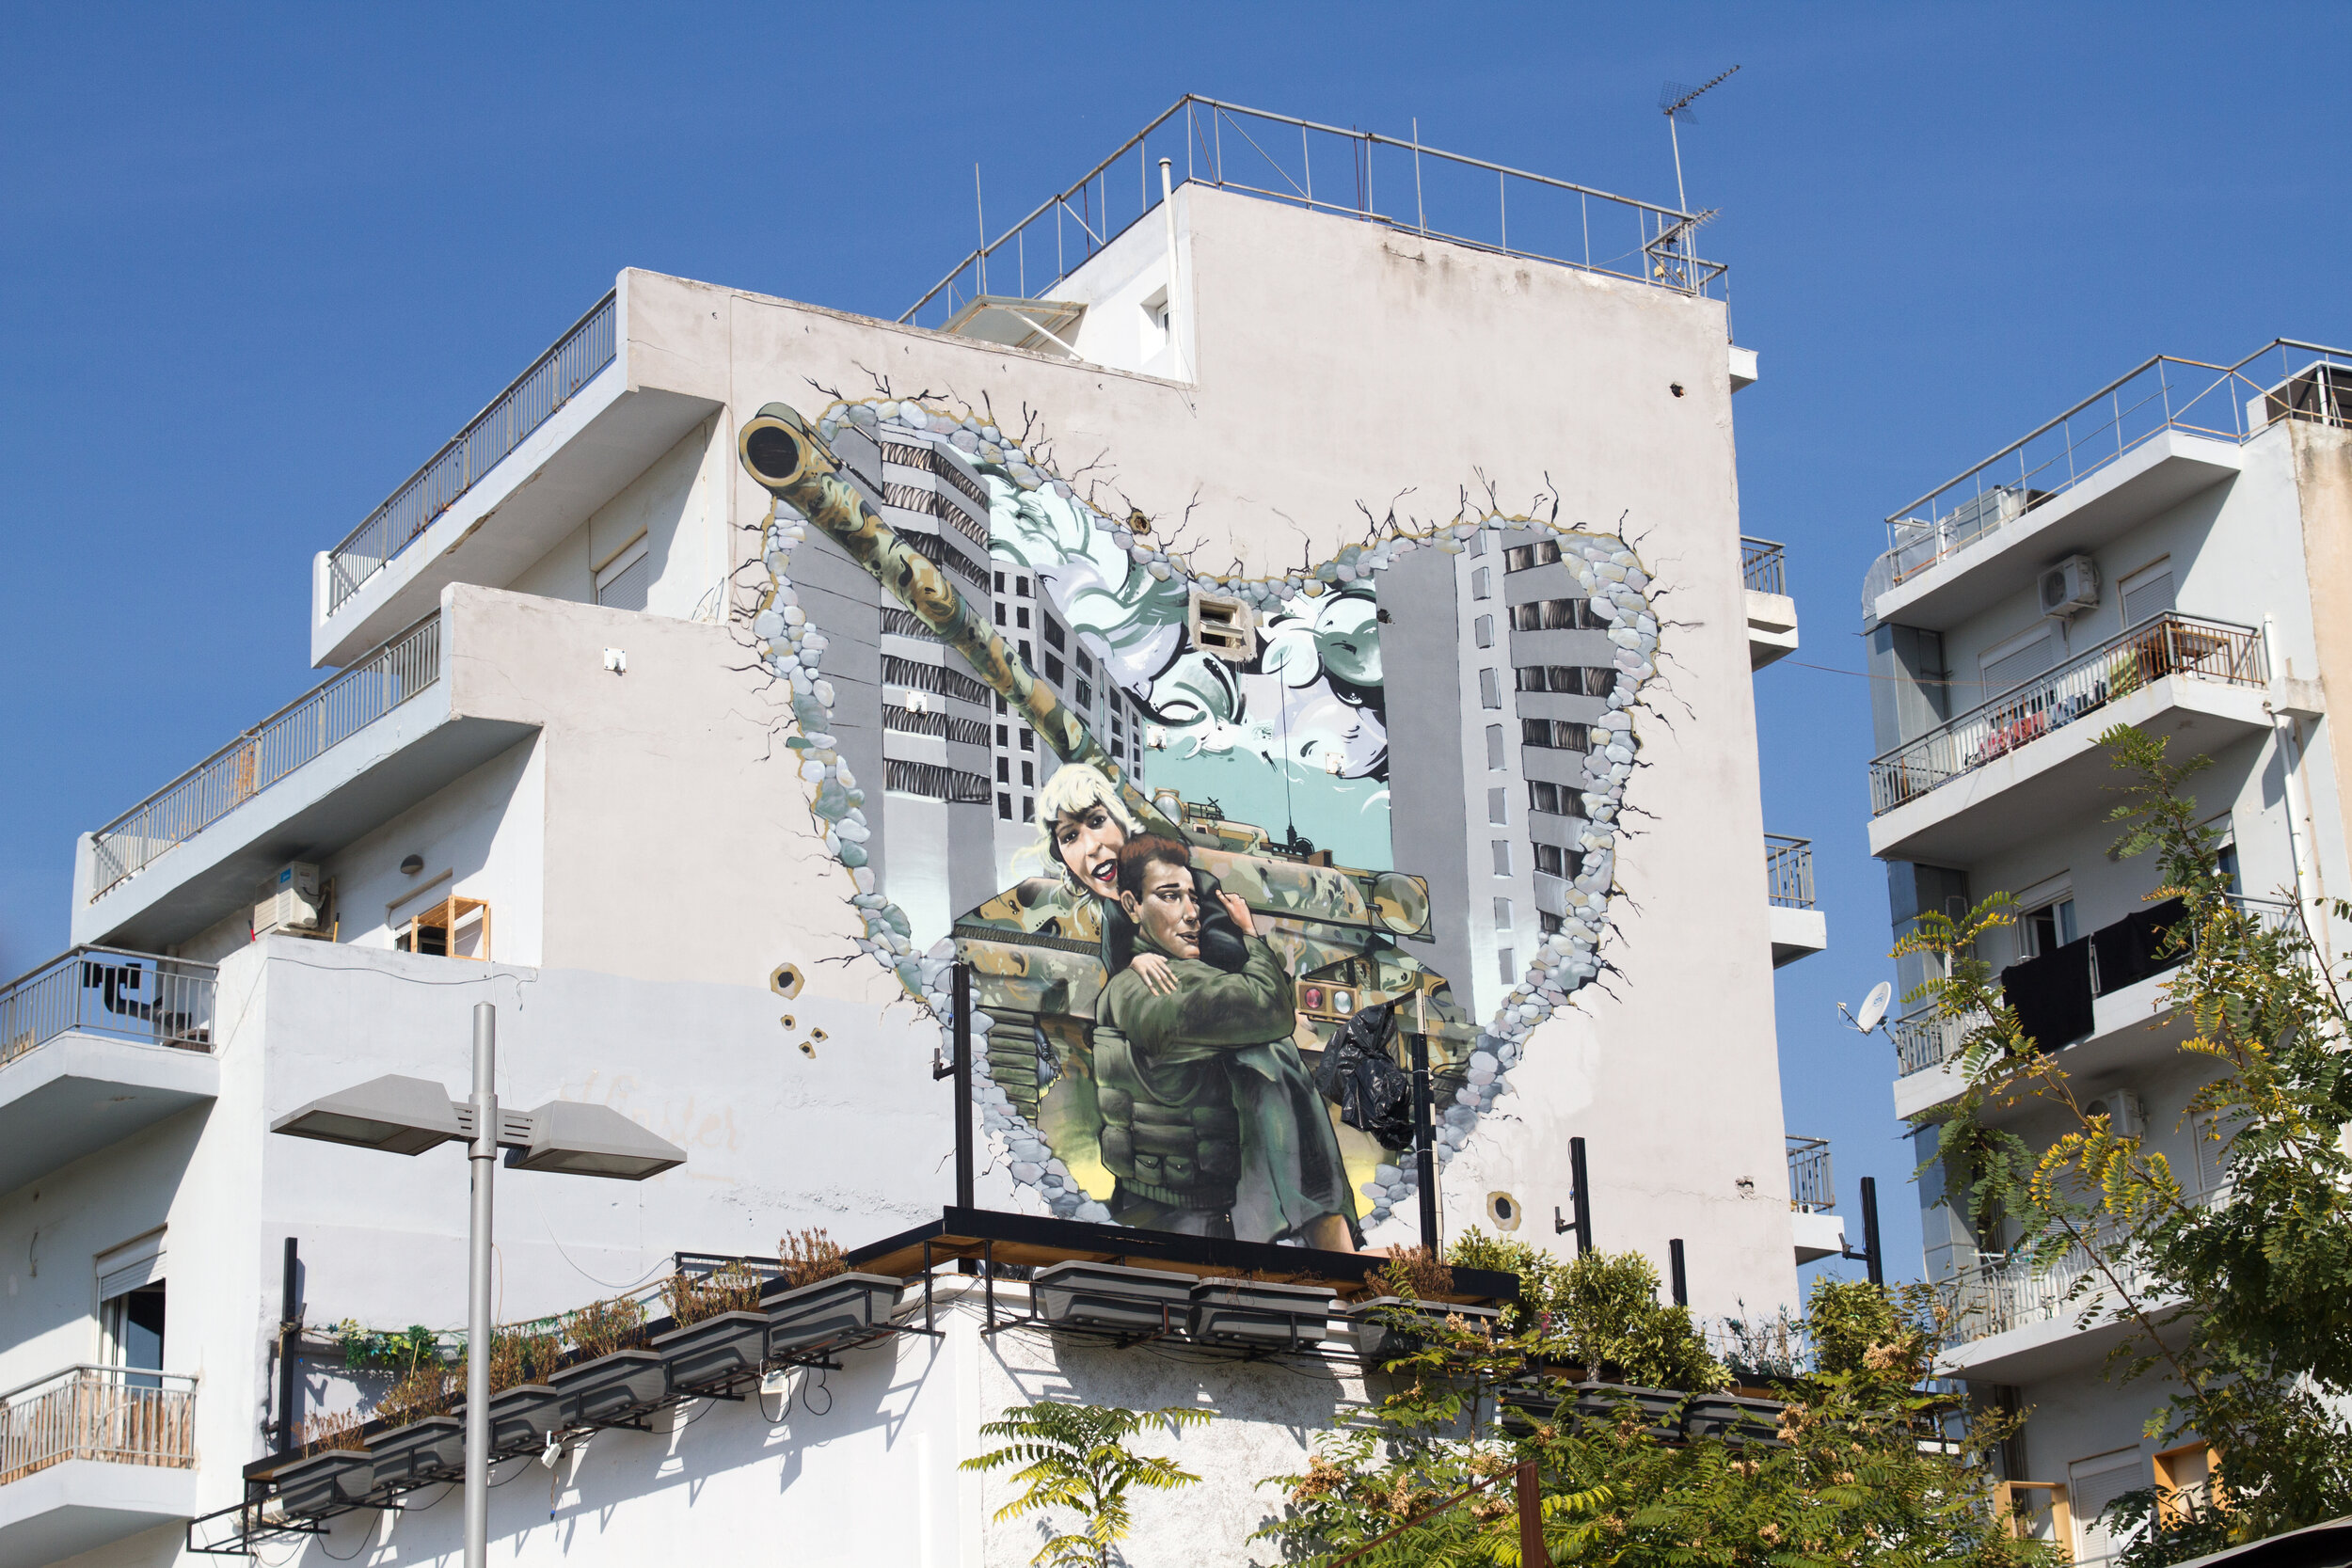 Athens street art tour-Alex King-6450.jpg